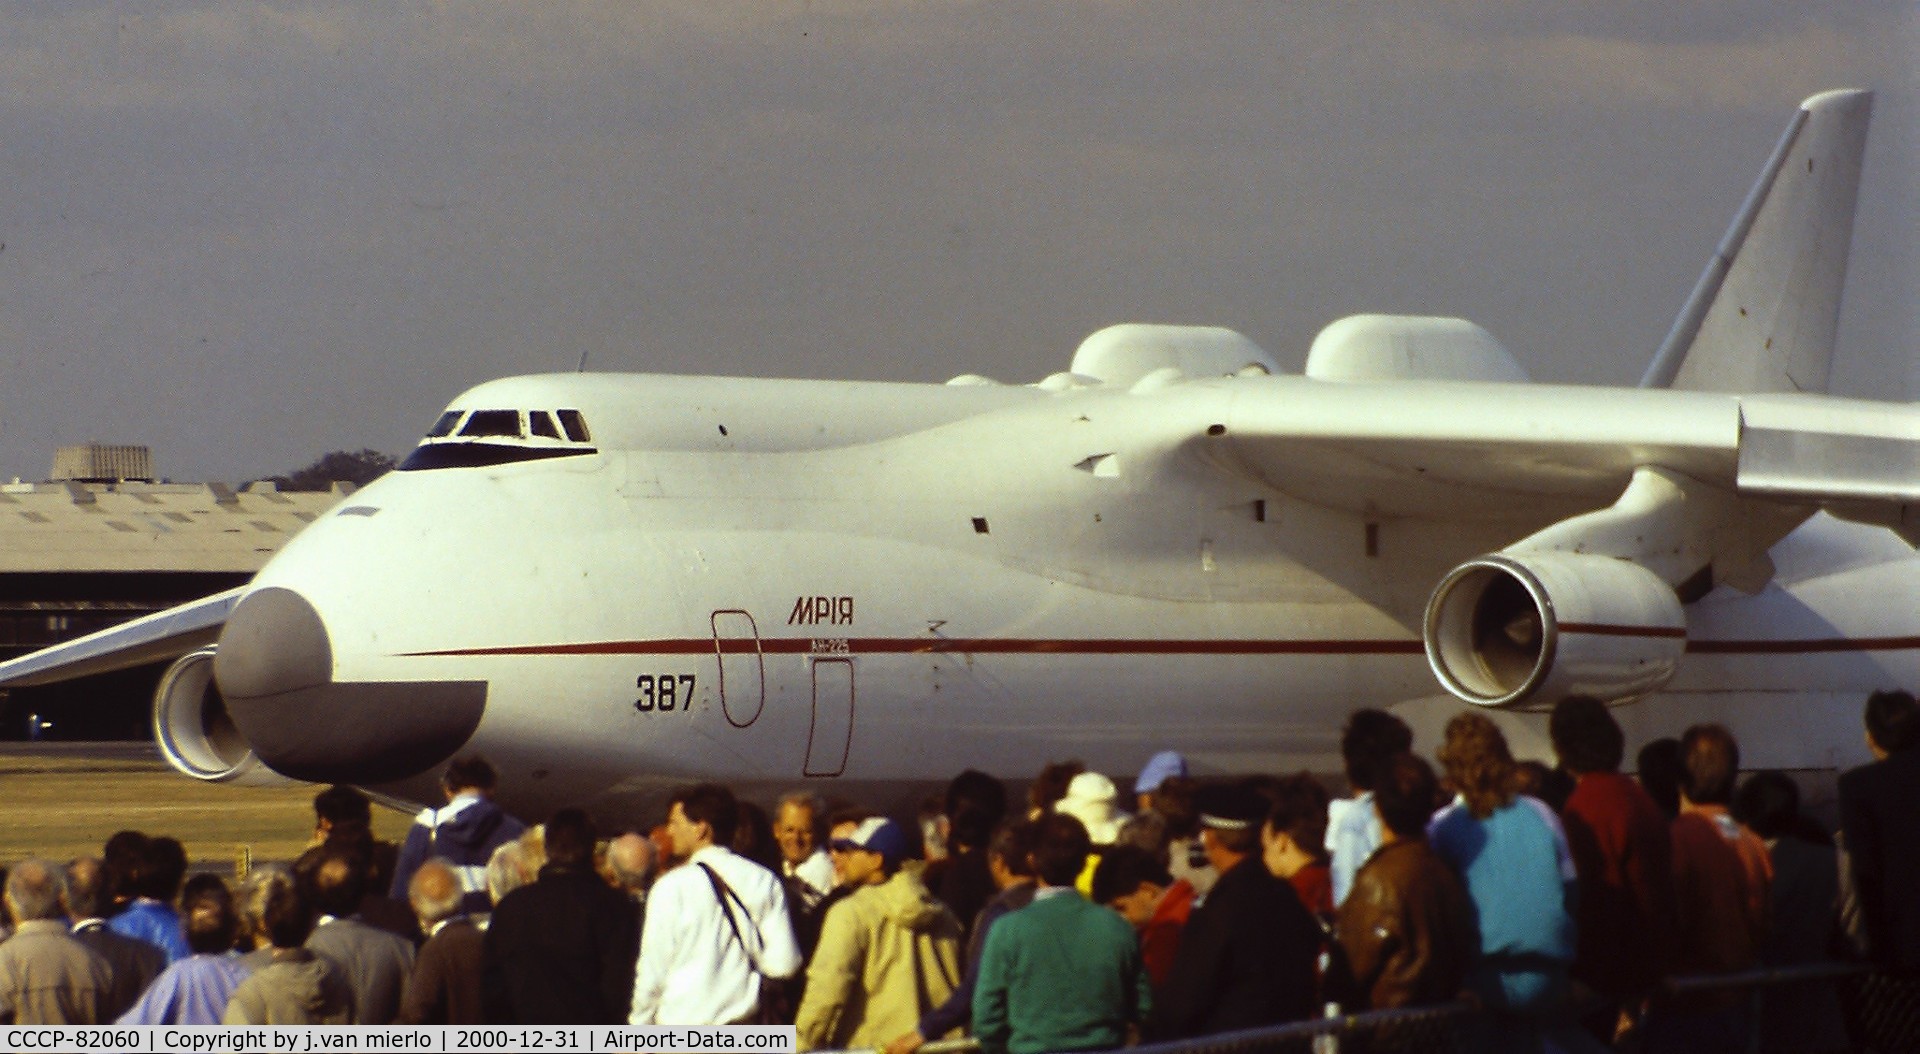 CCCP-82060, 1988 Antonov An-225 Mriya C/N 19530503763, Farnborough